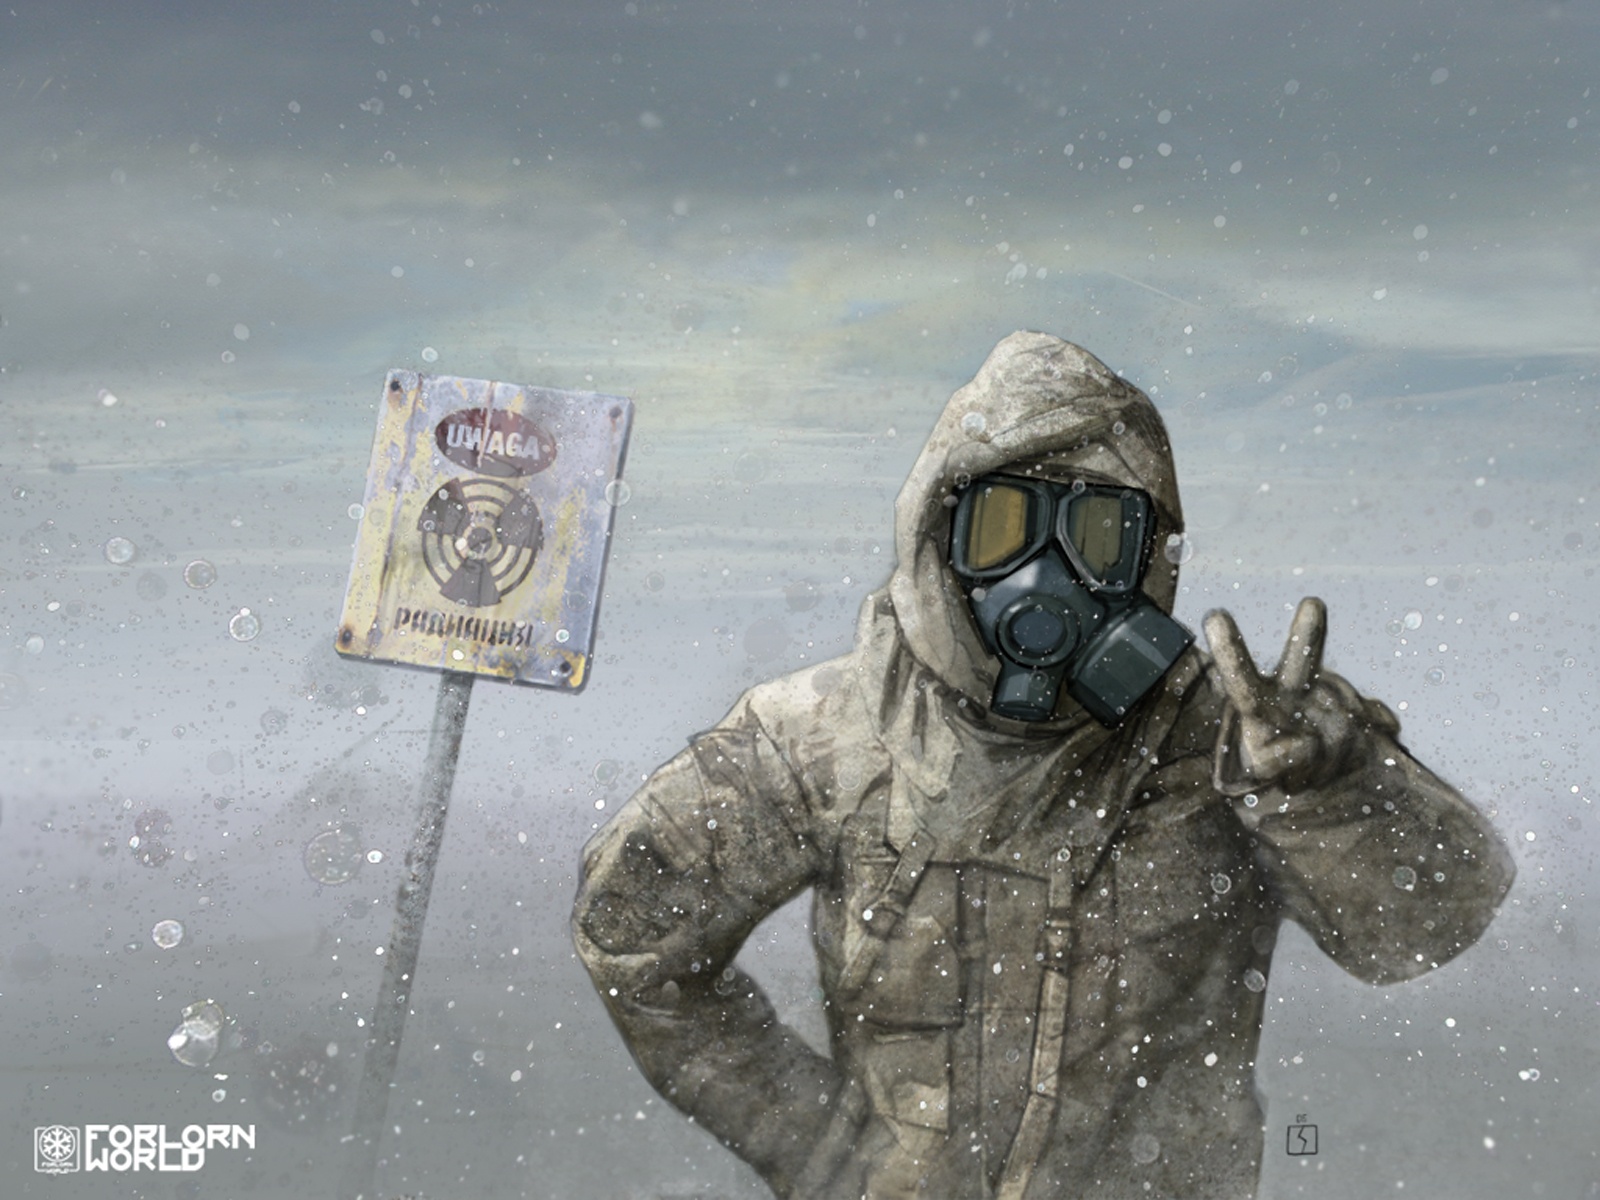 Nuclear Winter Desktop Wallpaper Pictures Photos